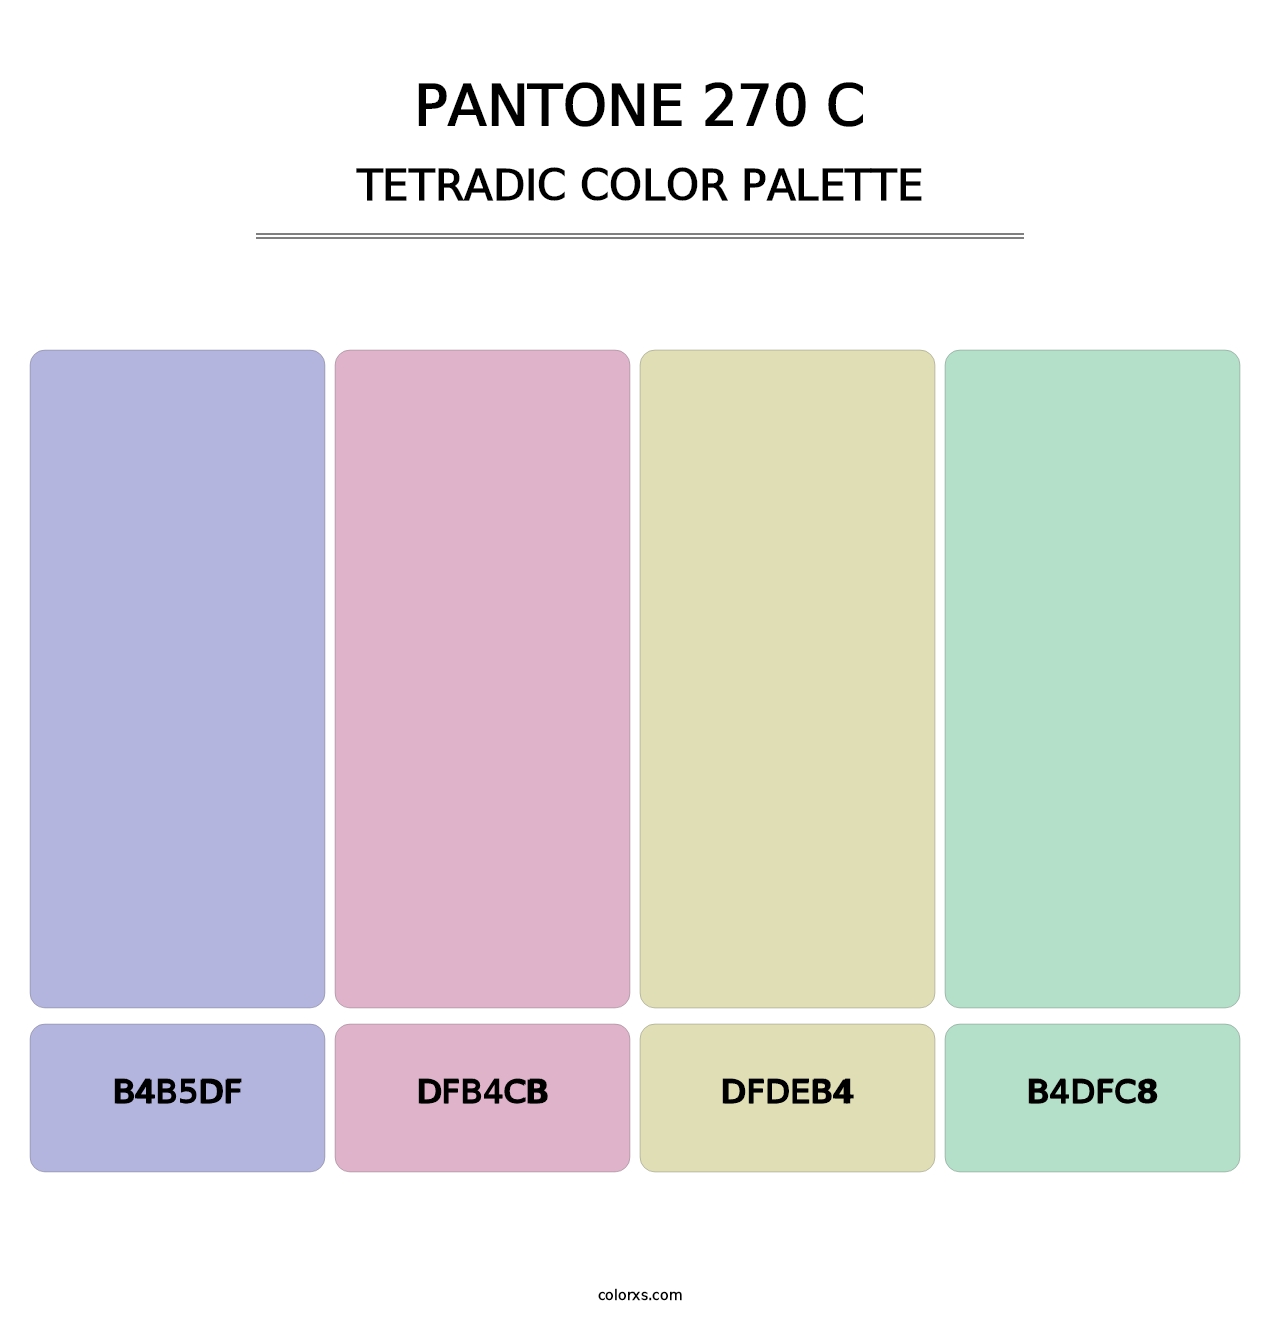 PANTONE 270 C - Tetradic Color Palette